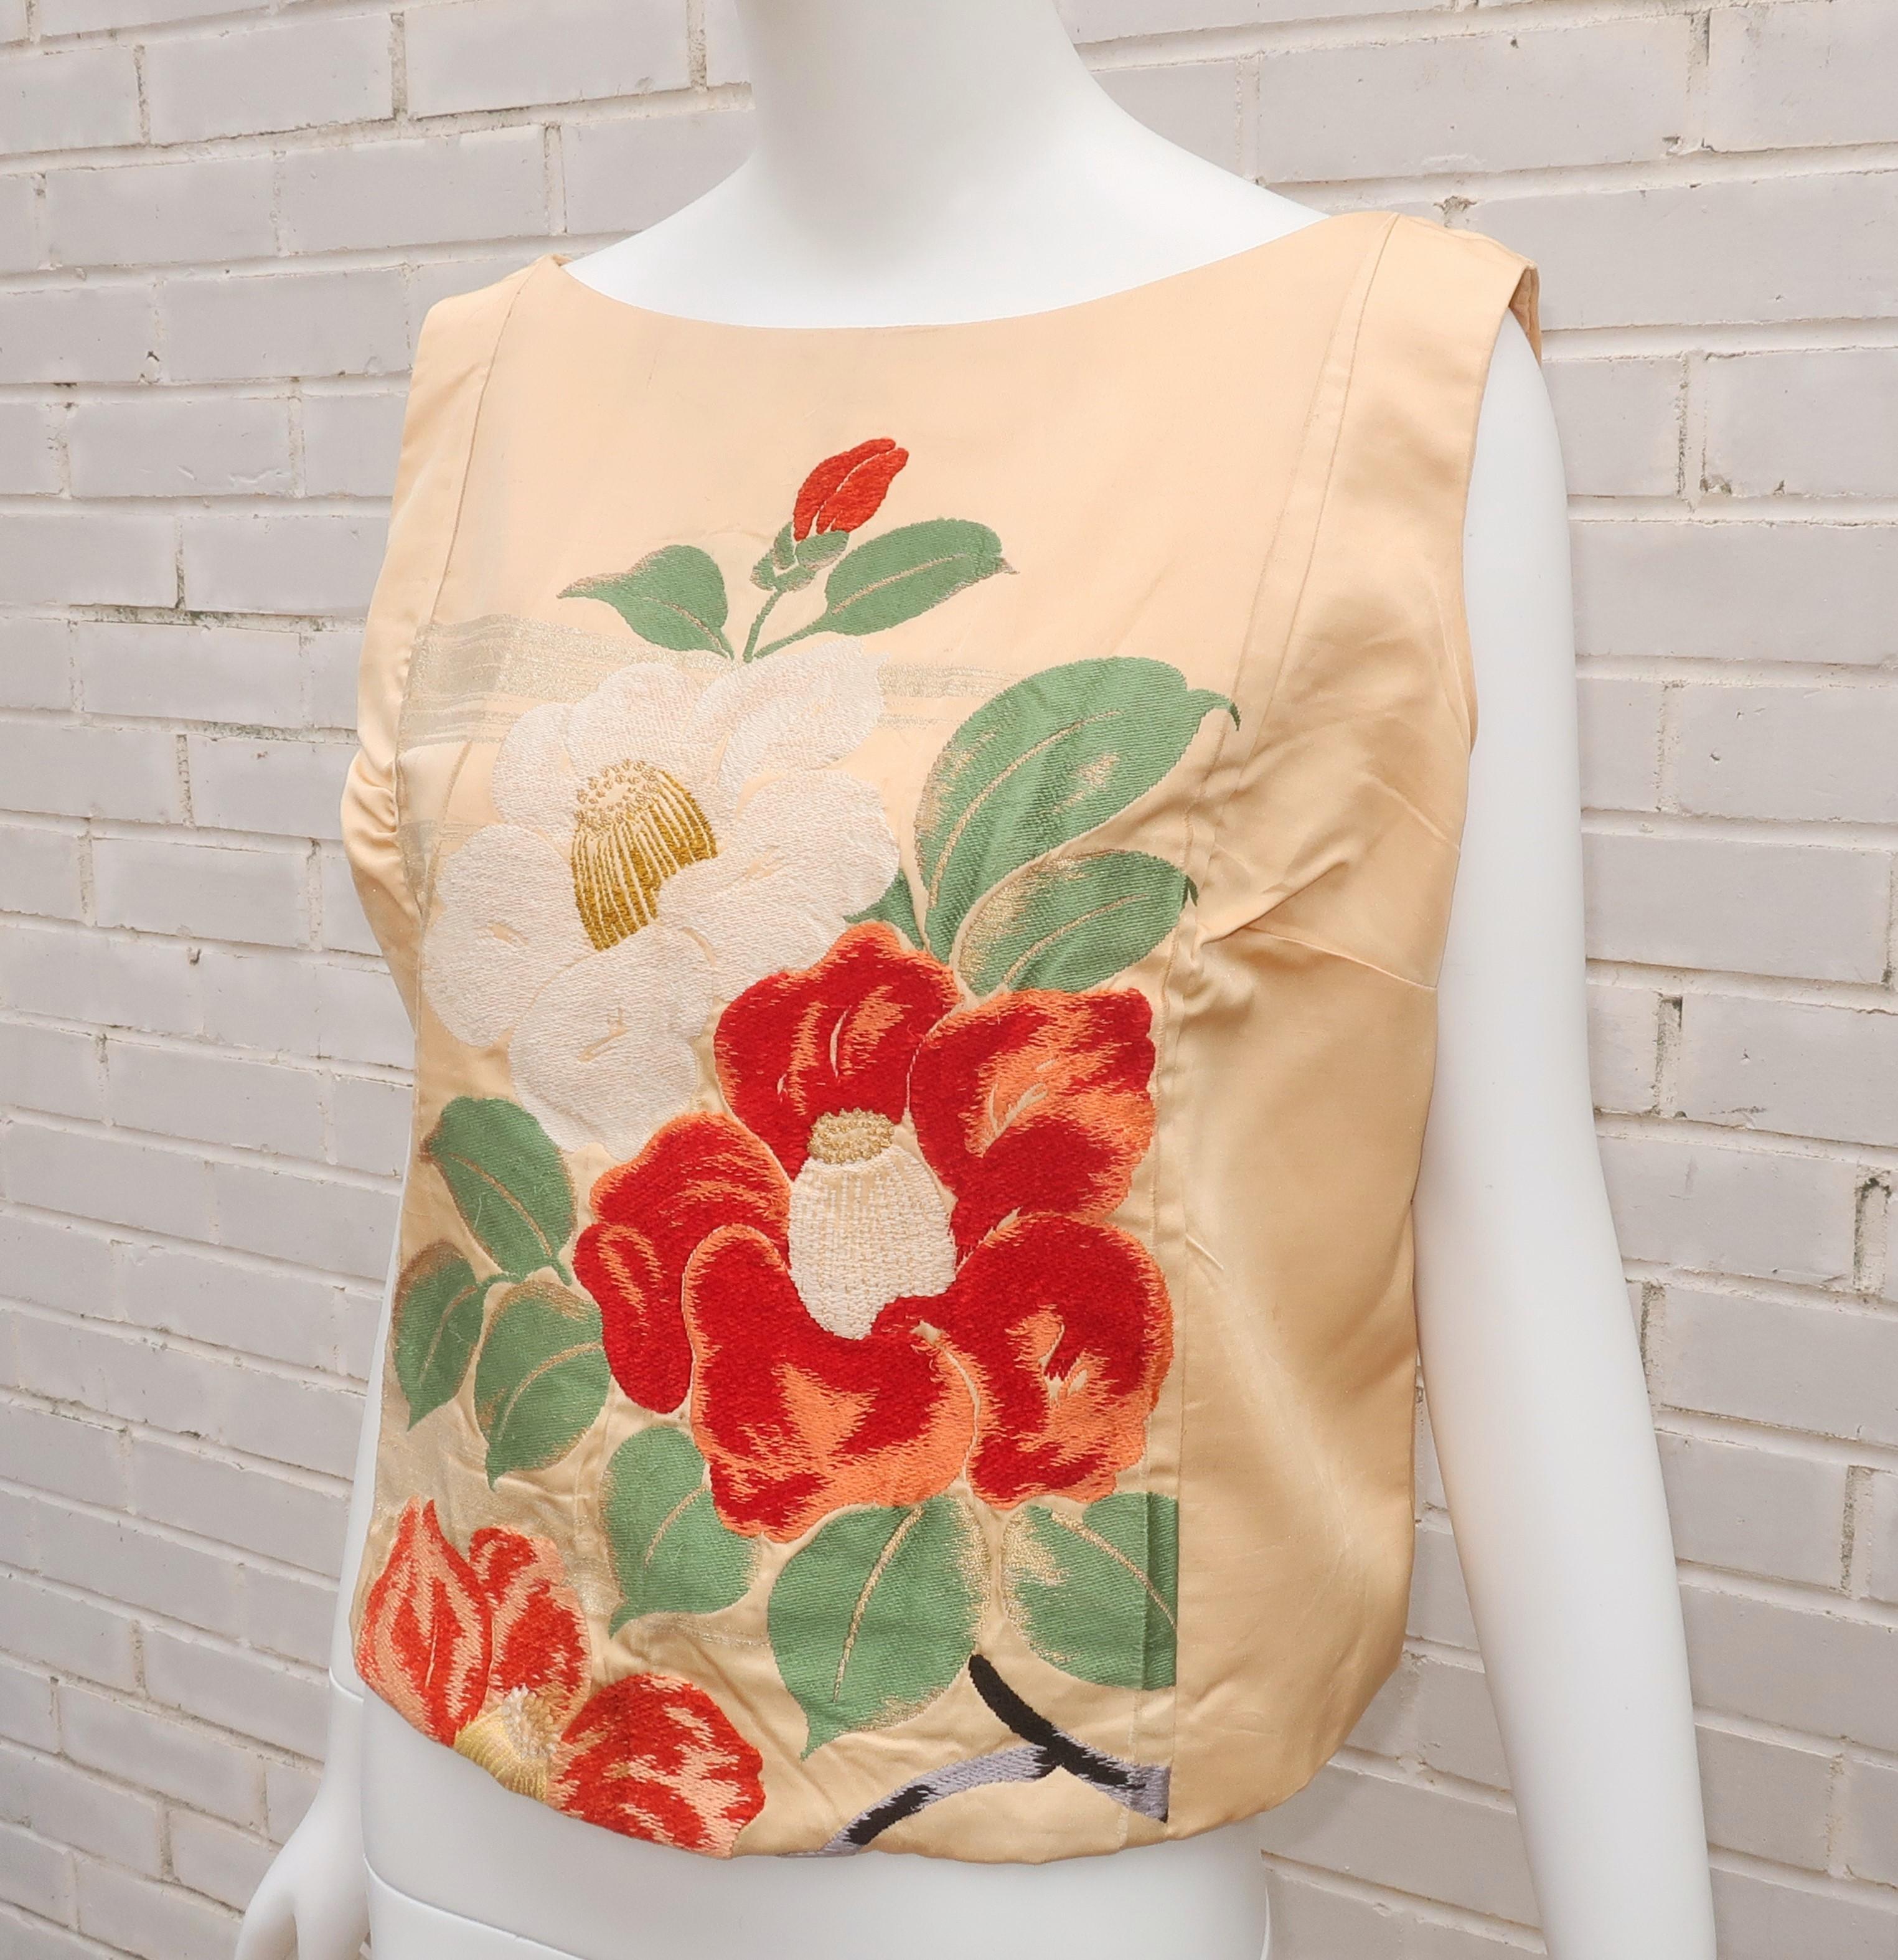 Beige Custom Obi Creme Top With Floral Design, C.1950 For Sale